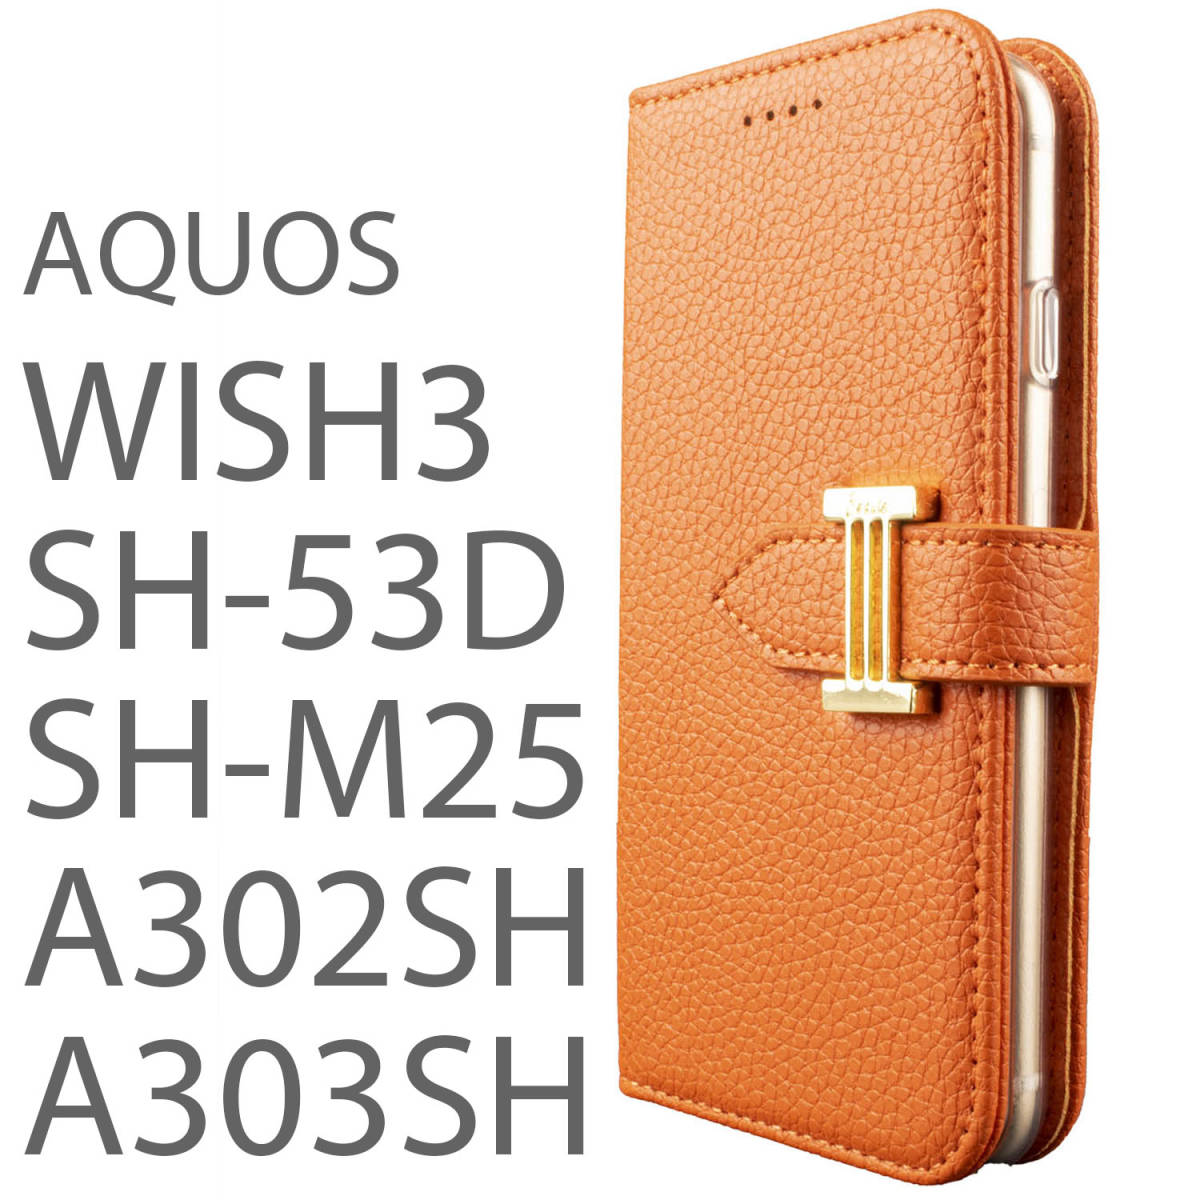 wish3 ケース 手帳型 おしゃれ オレンジ 橙 SH53D カバー SHM25 A302SH A303SH AQUOS かわいい 鏡付 ストラップ付 ベルト式 送料無料 安い_画像1